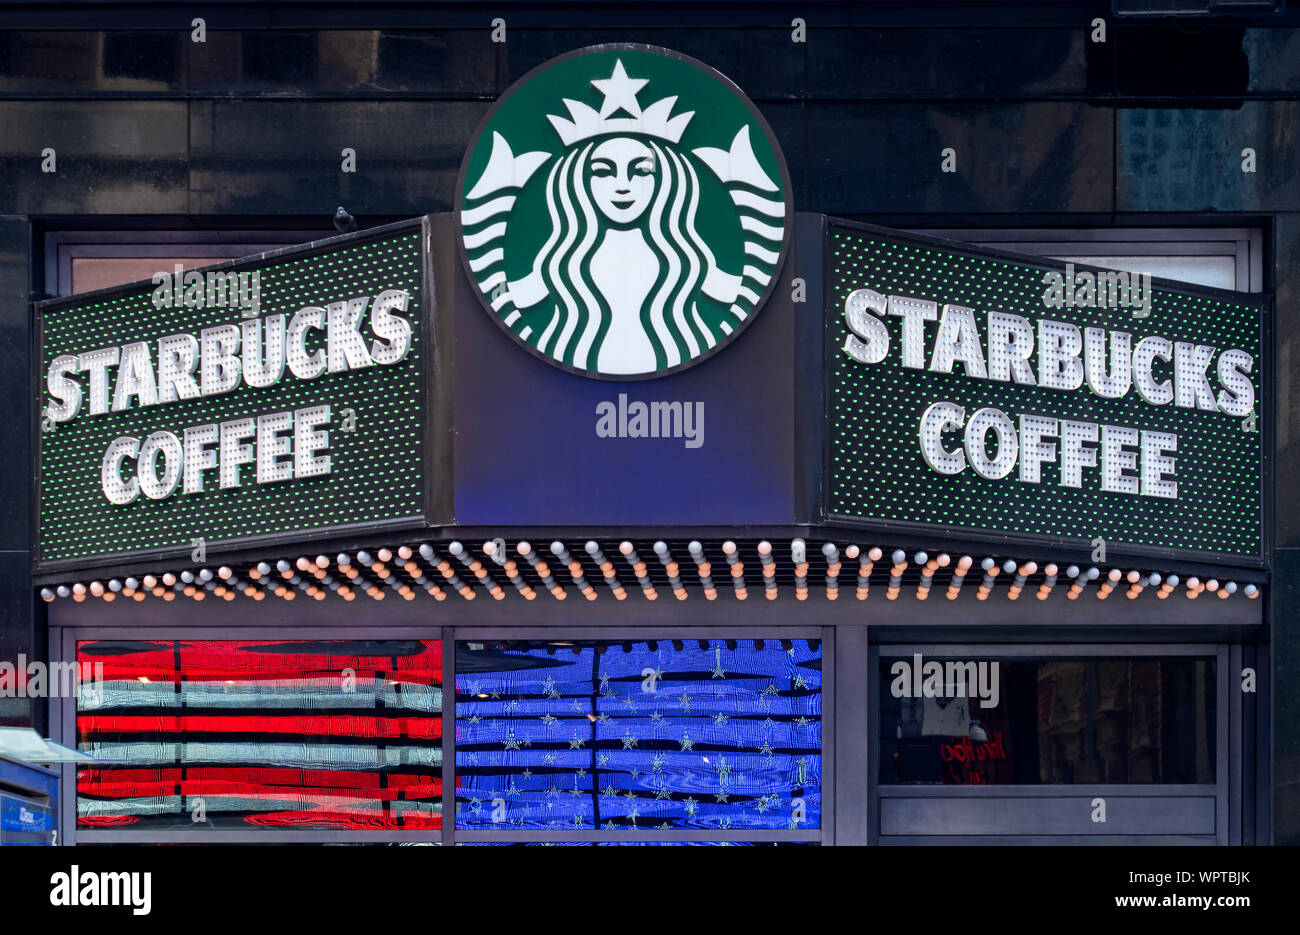 Starbucks Entrance and Emblem, Times Square, New York, USA Stock Photo